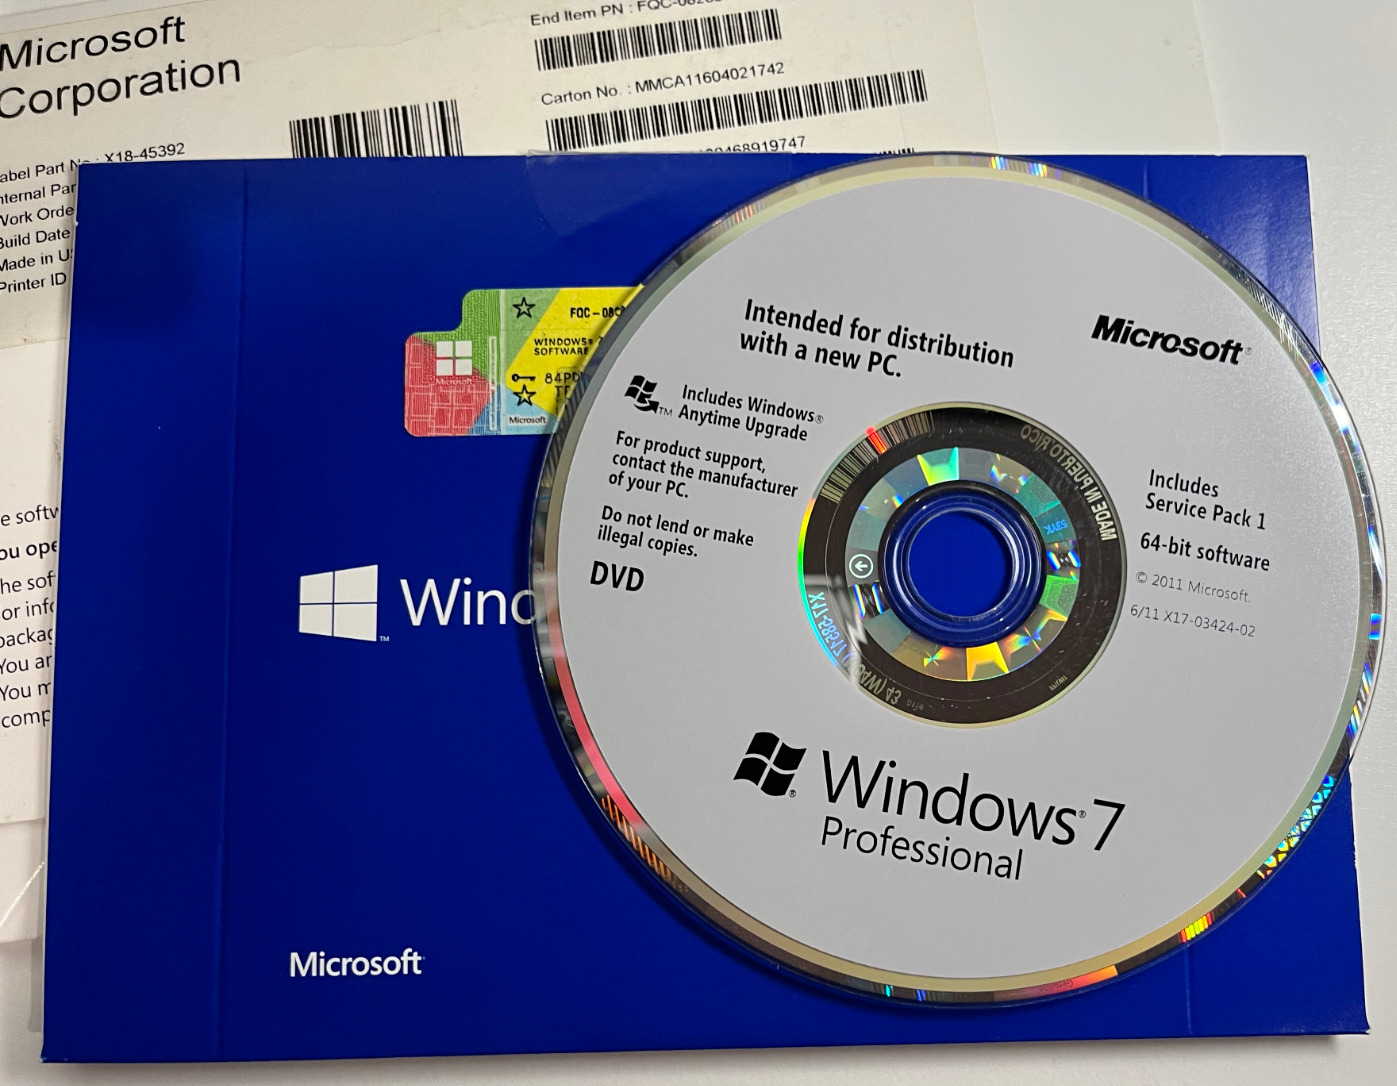 Microsoft Windows 7 Professional 64 Bit DVD Key Included